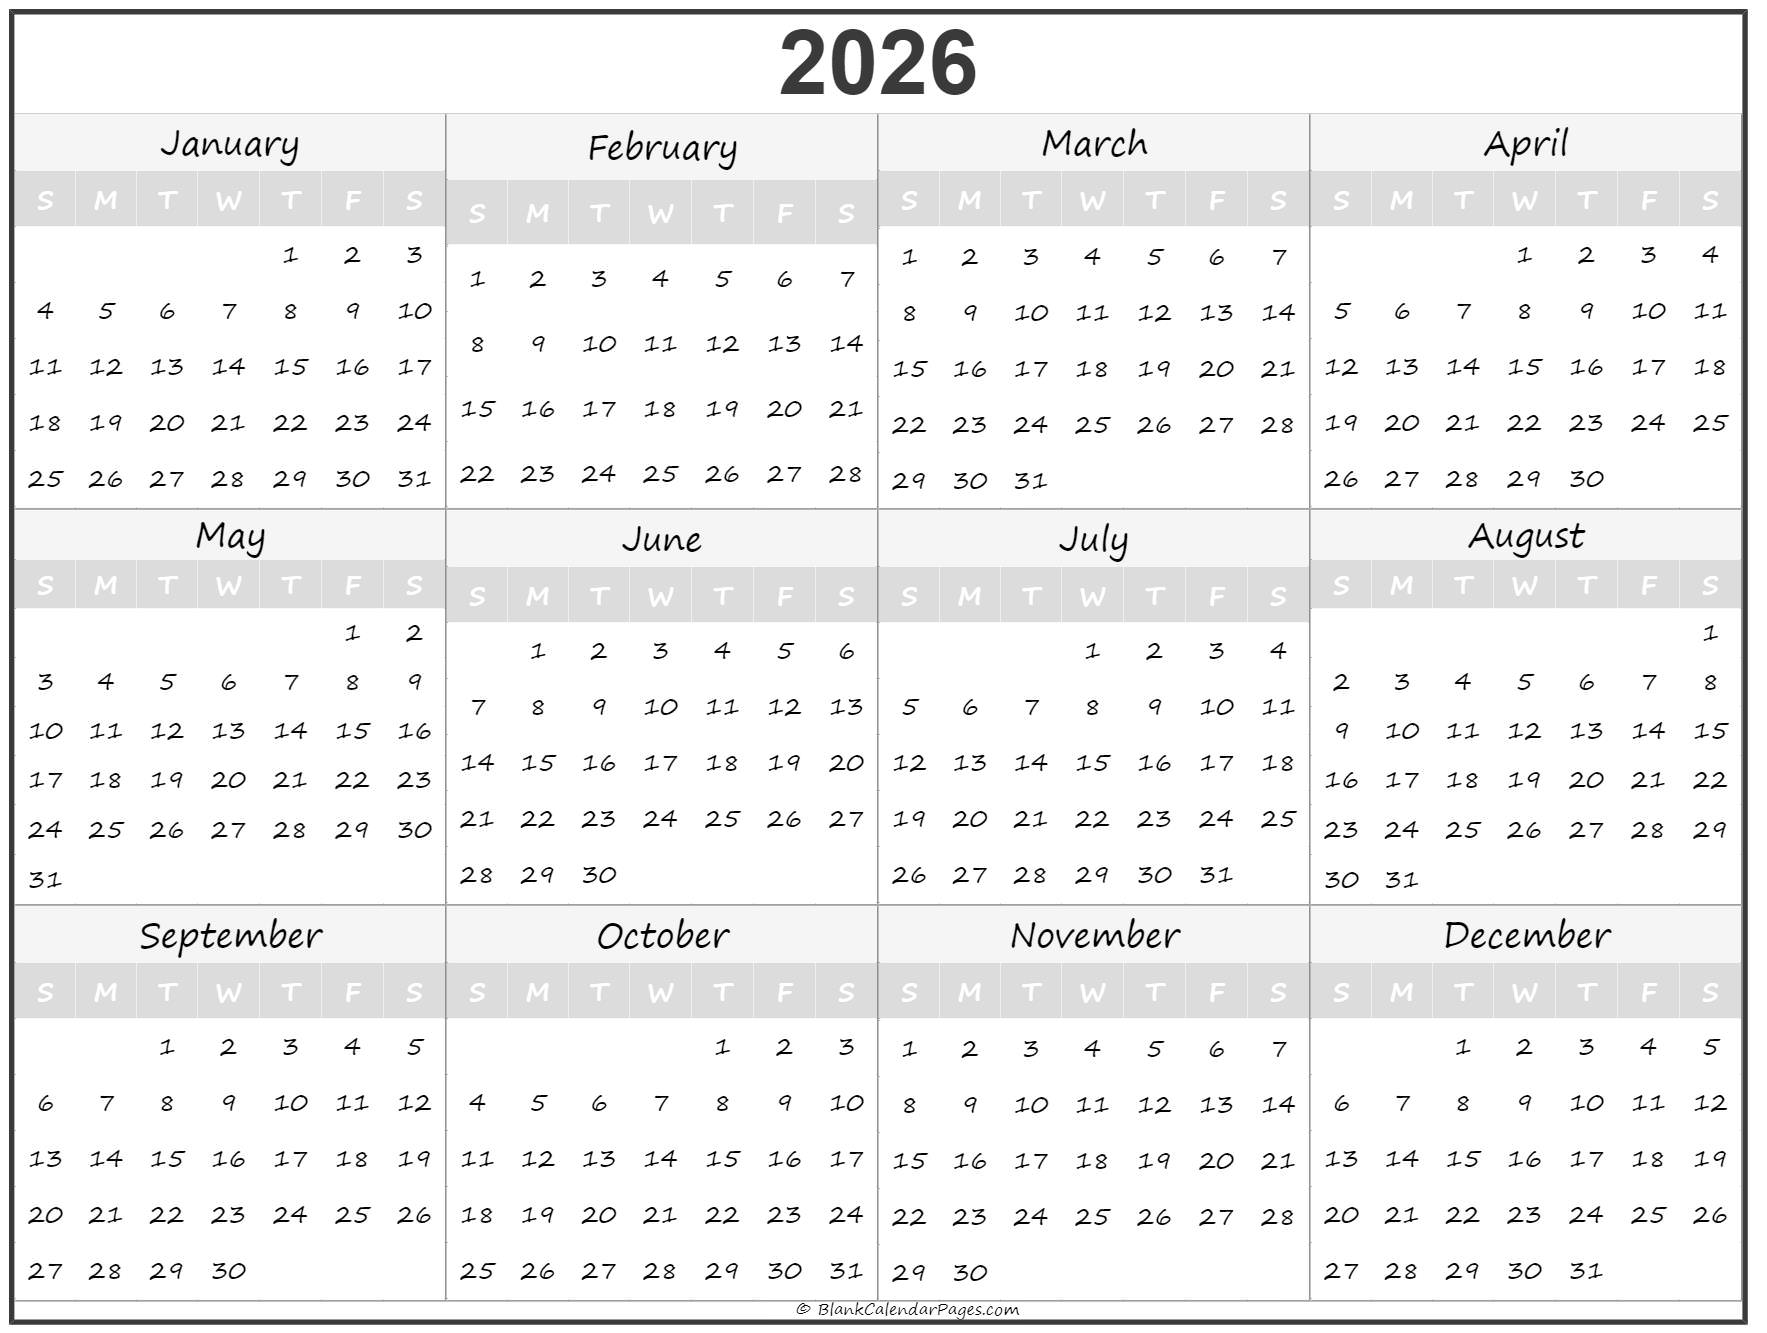 2026-calendar-printable-one-page